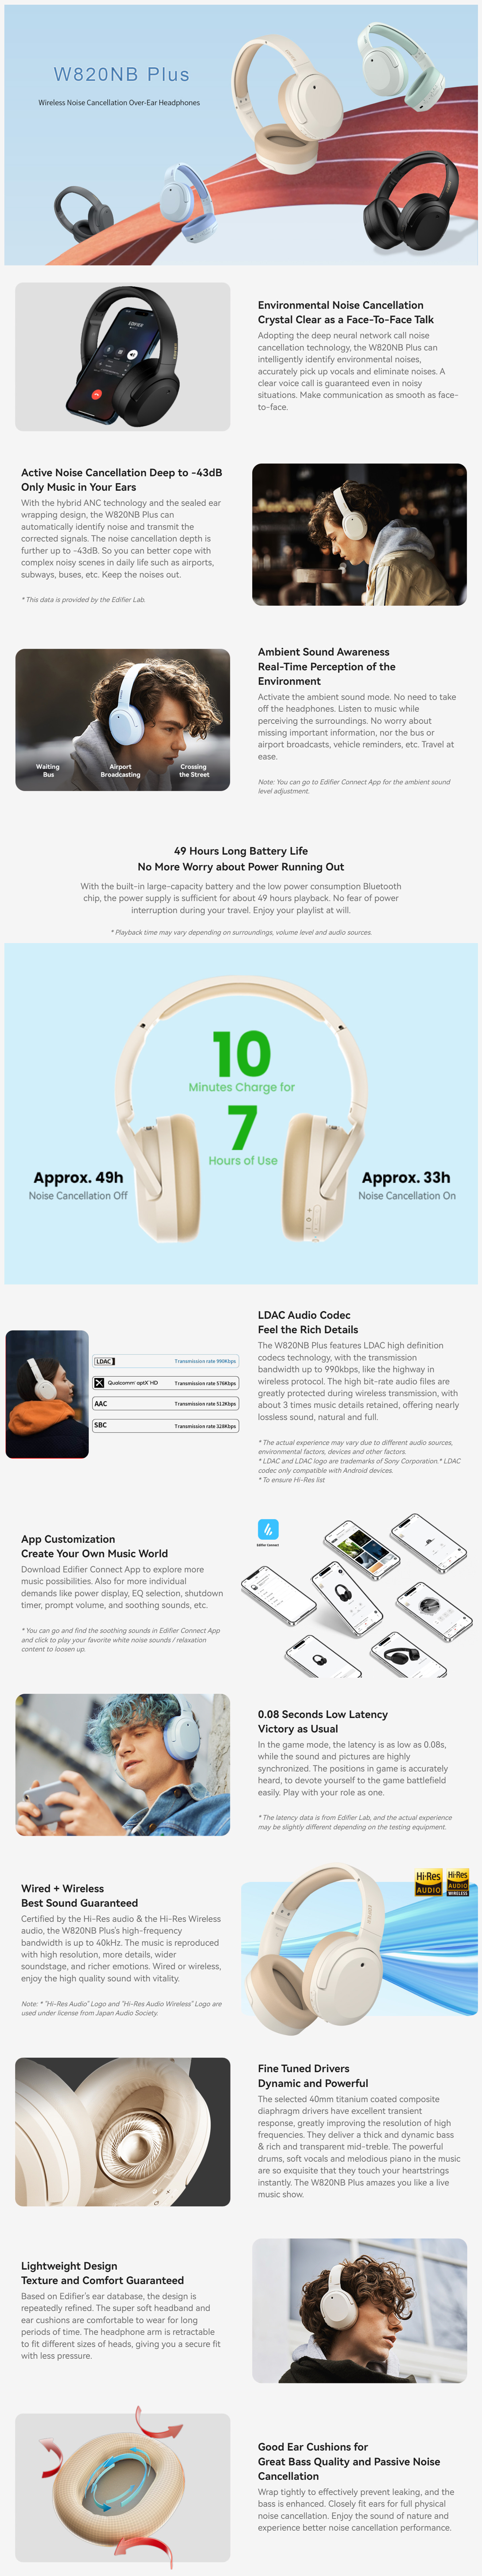 Headphones-Edifier-W820NB-Plus-Active-Noise-Cancelling-Wireless-Bluetooth-Headphone-Ivory-3